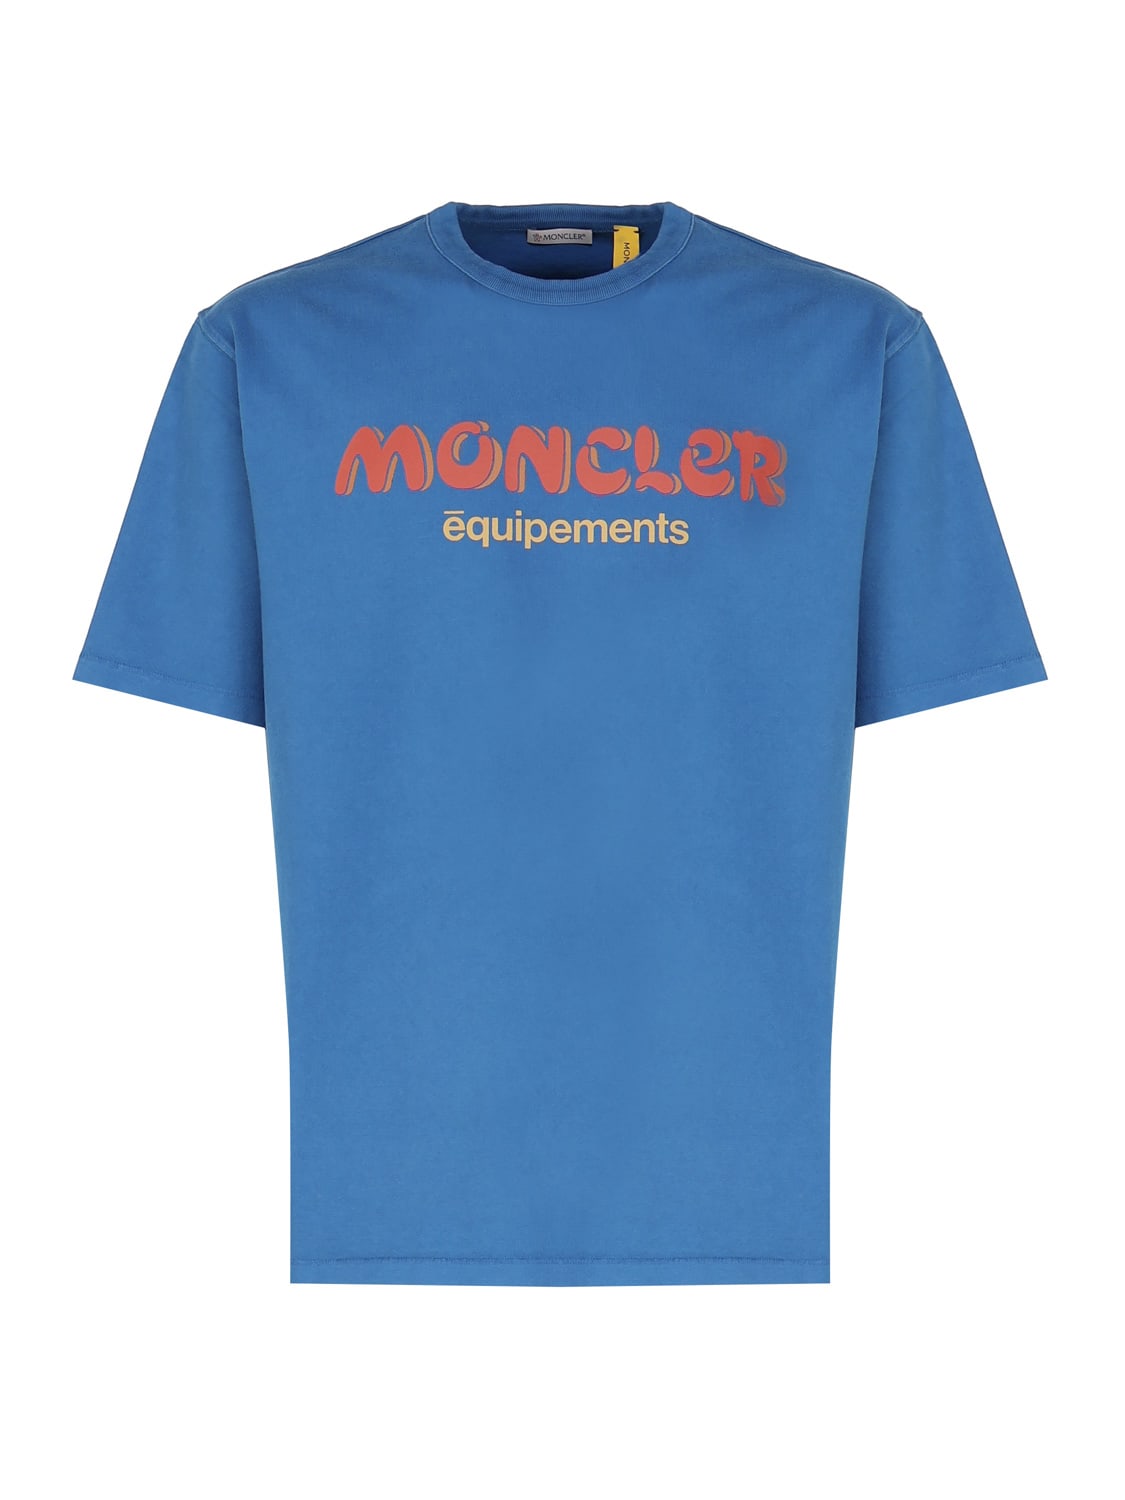 Moncler X Salehe Bembury T-shirt